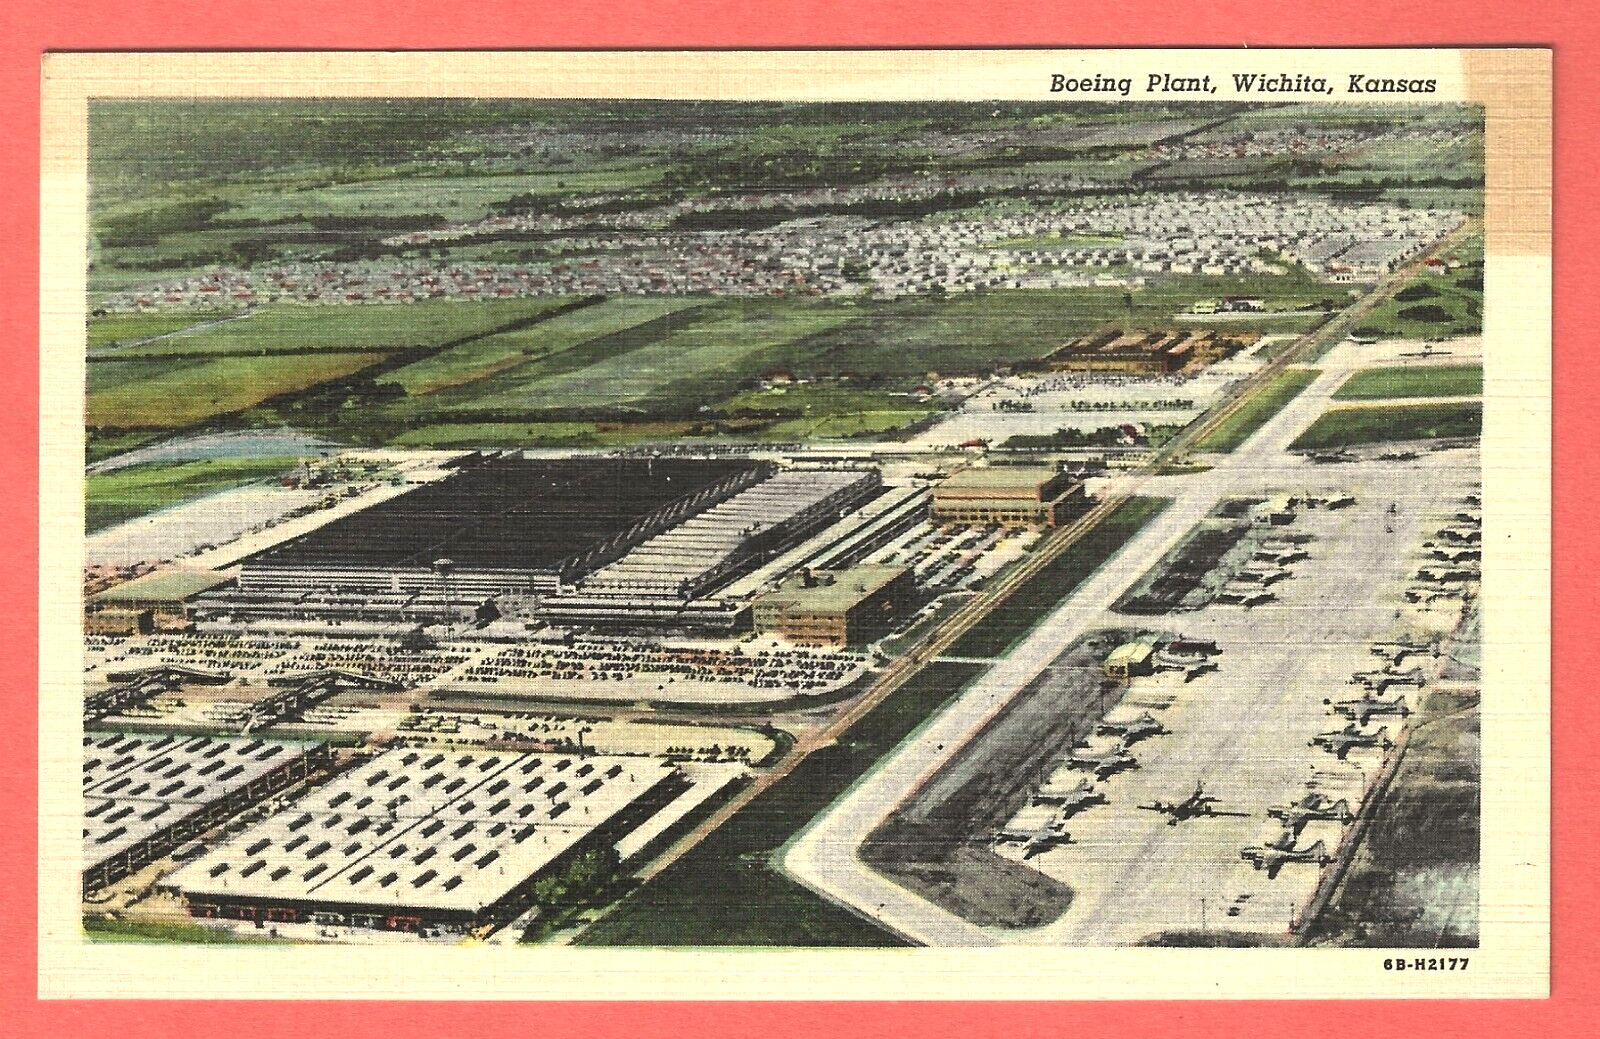 WICHITA, KANSAS – BOEING AIRCRAFT PLANT – AERIAL VIEW - 1946 Linen Postcard